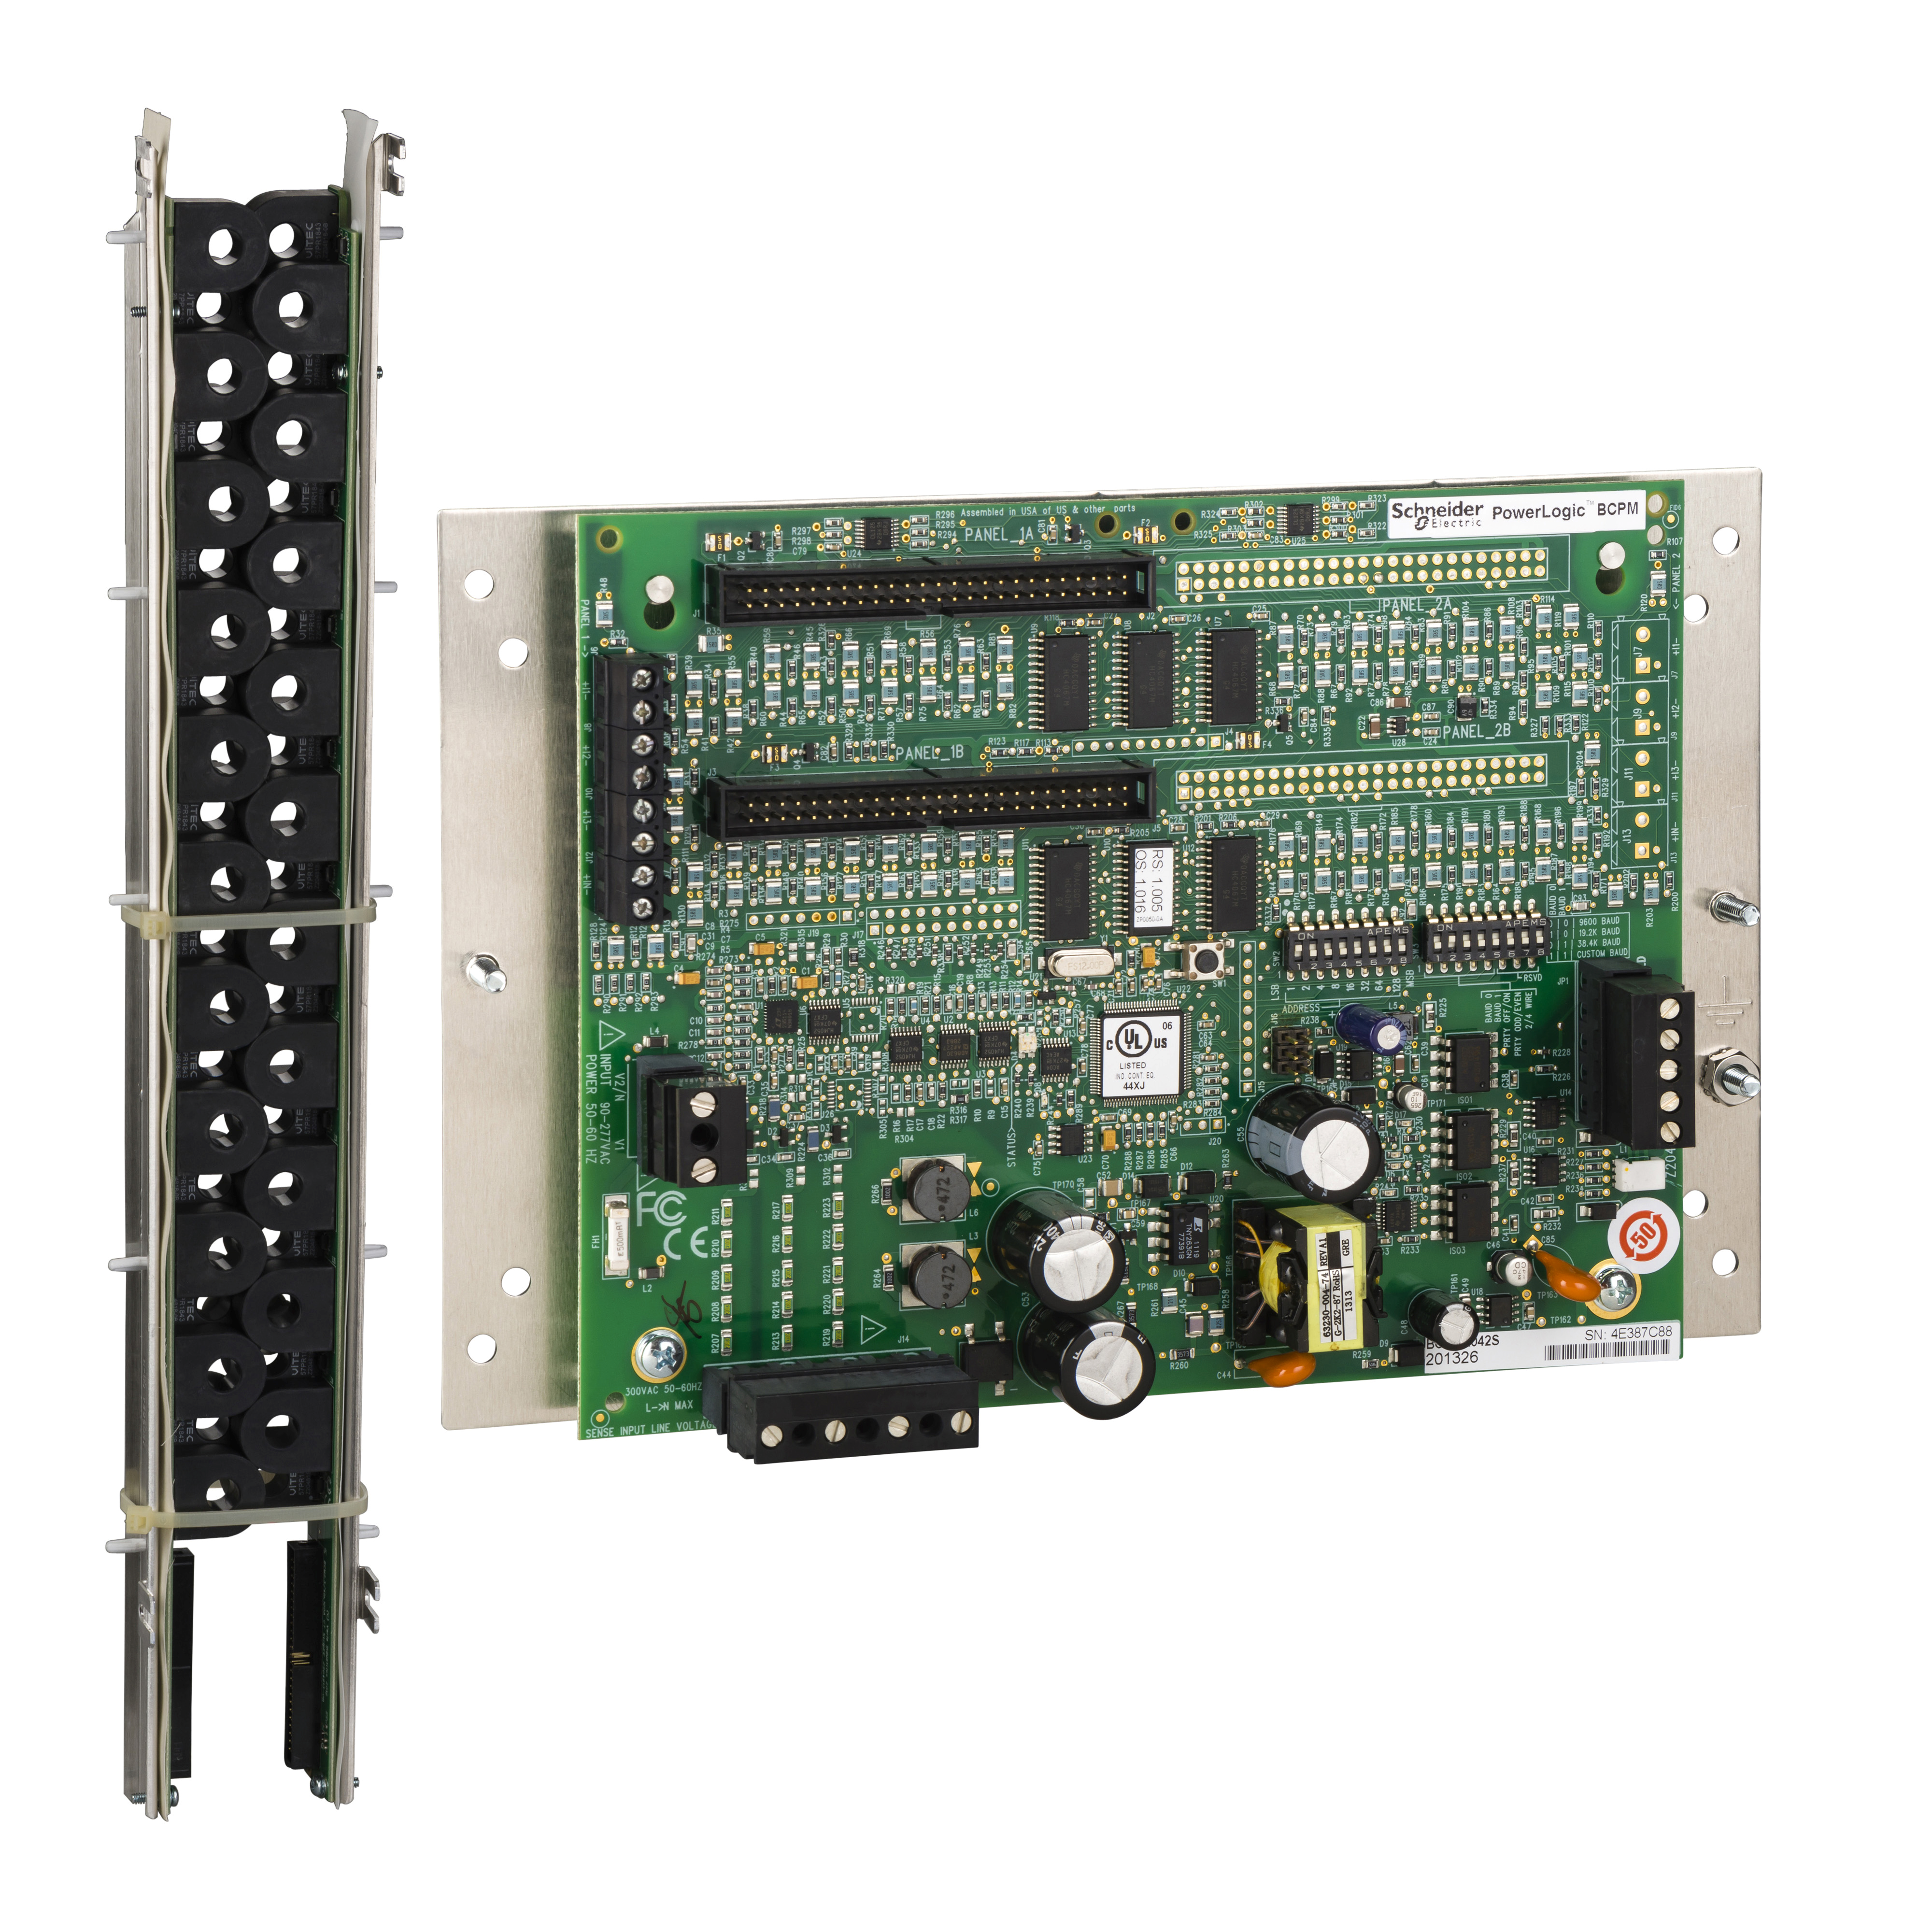 BCPM power monitoring advanced + ethernet - 42 split core CT 50 A